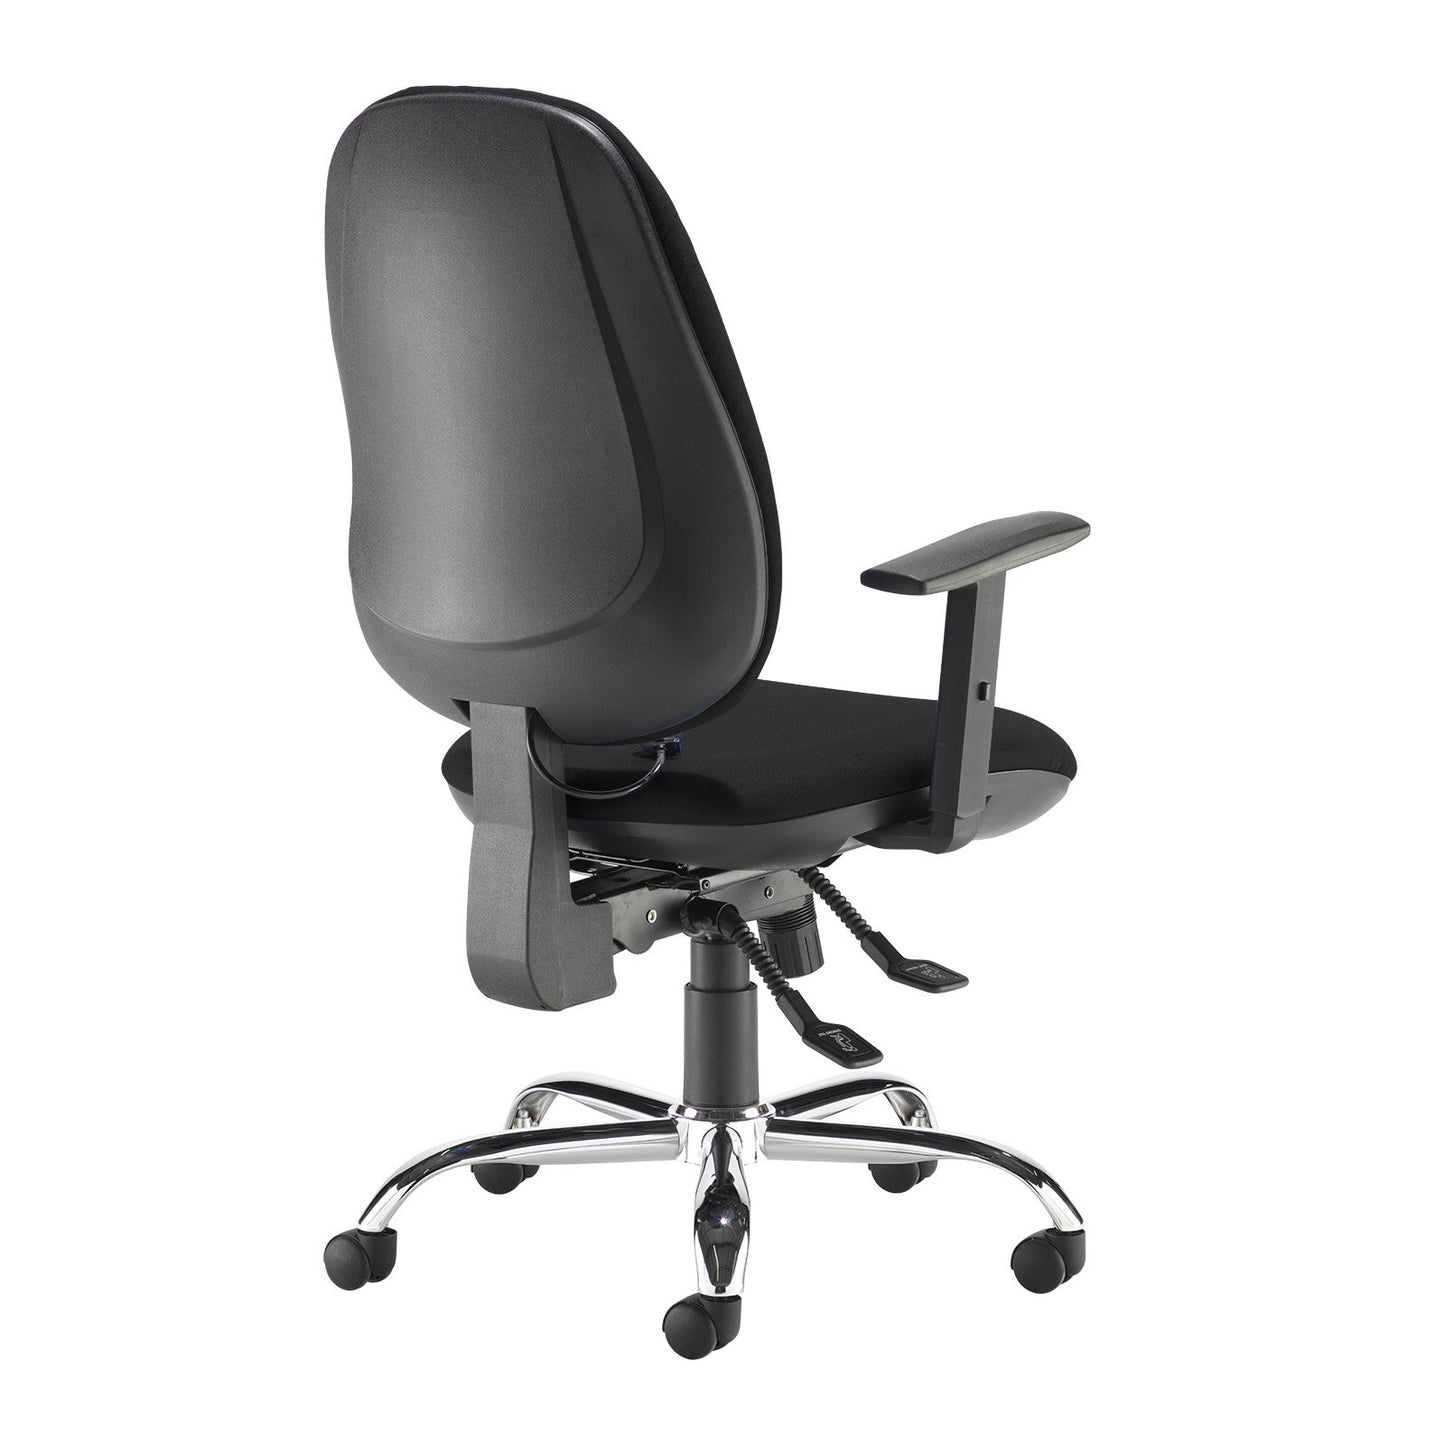 Jota Ergo 24hr ergonomic task chair